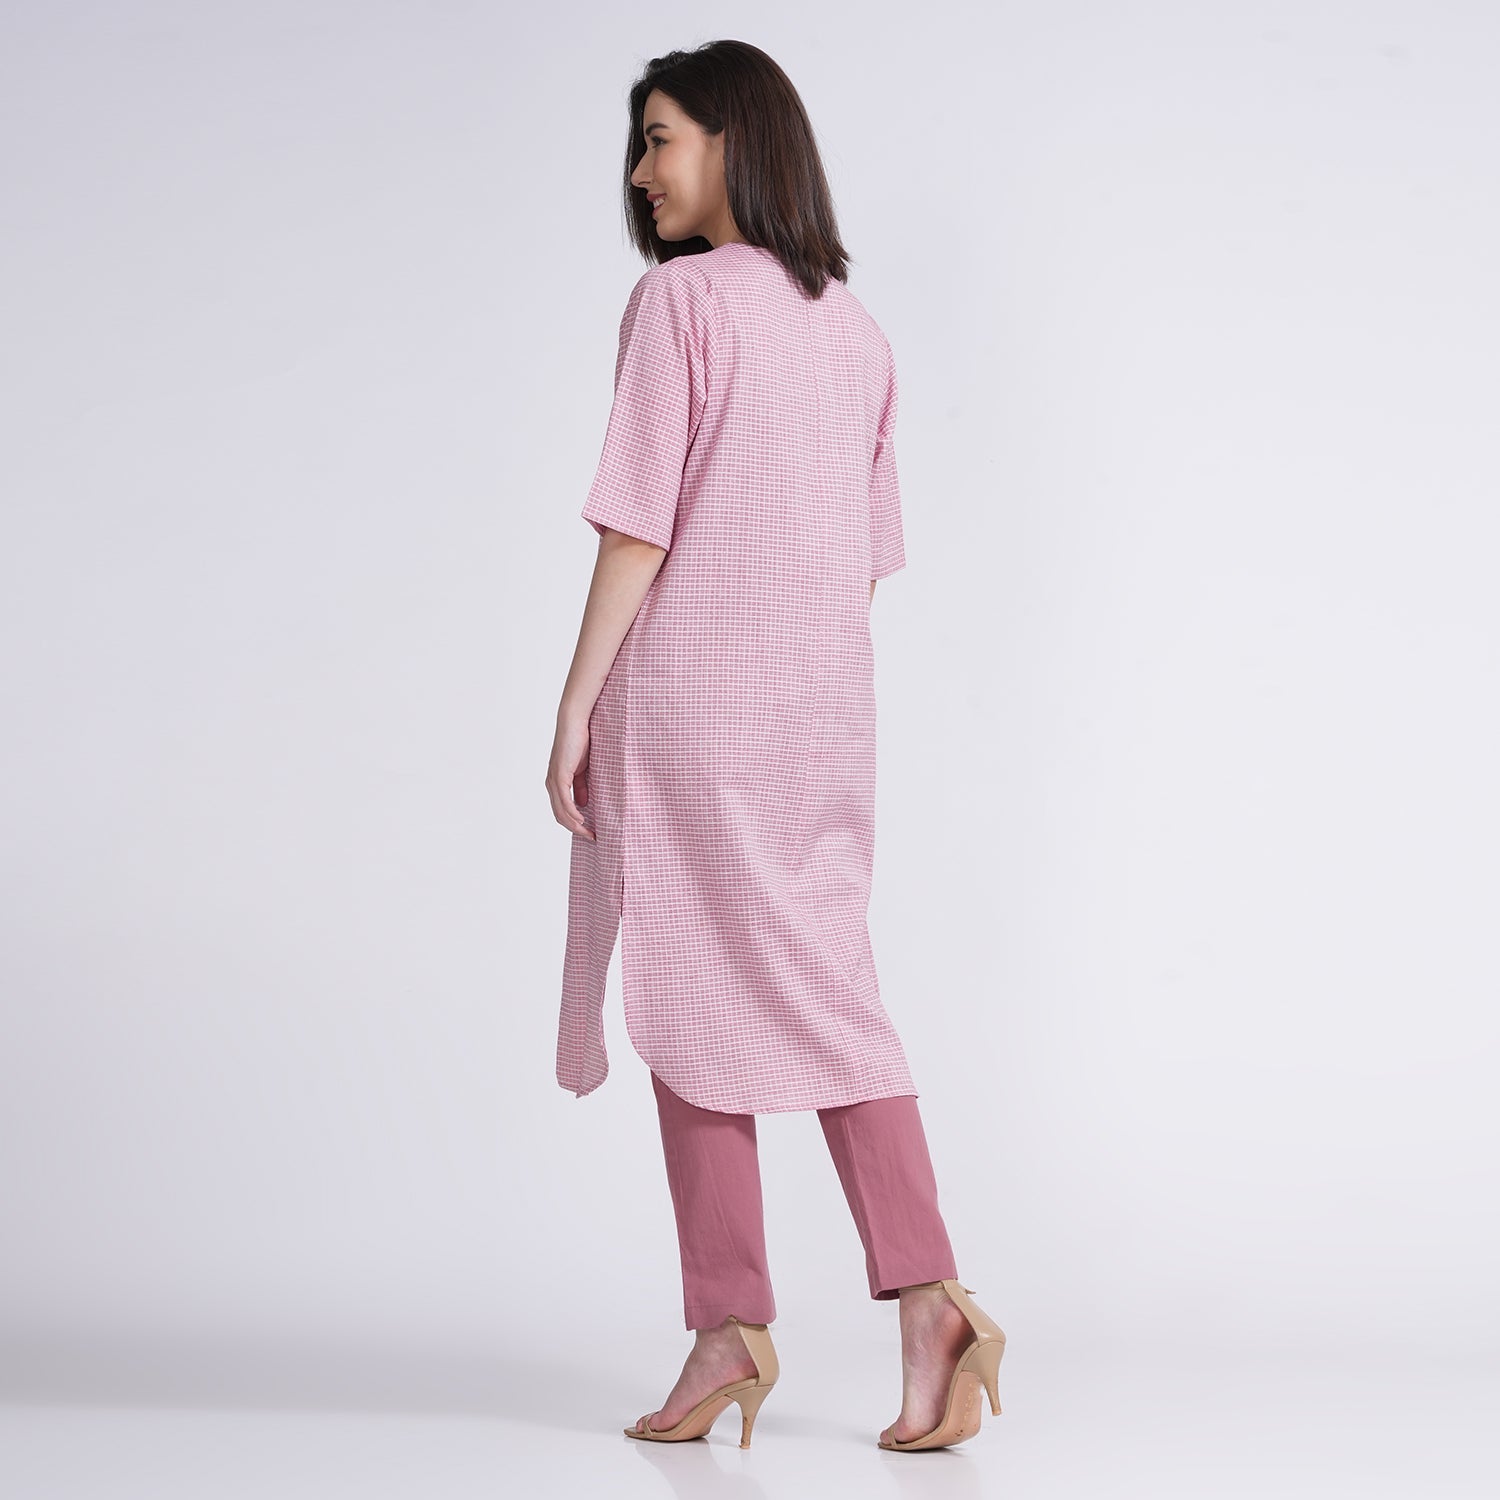 Arabella Set Of 3 - Overlay, Slip Top & Pants - Pastel Pink Check & Ecru